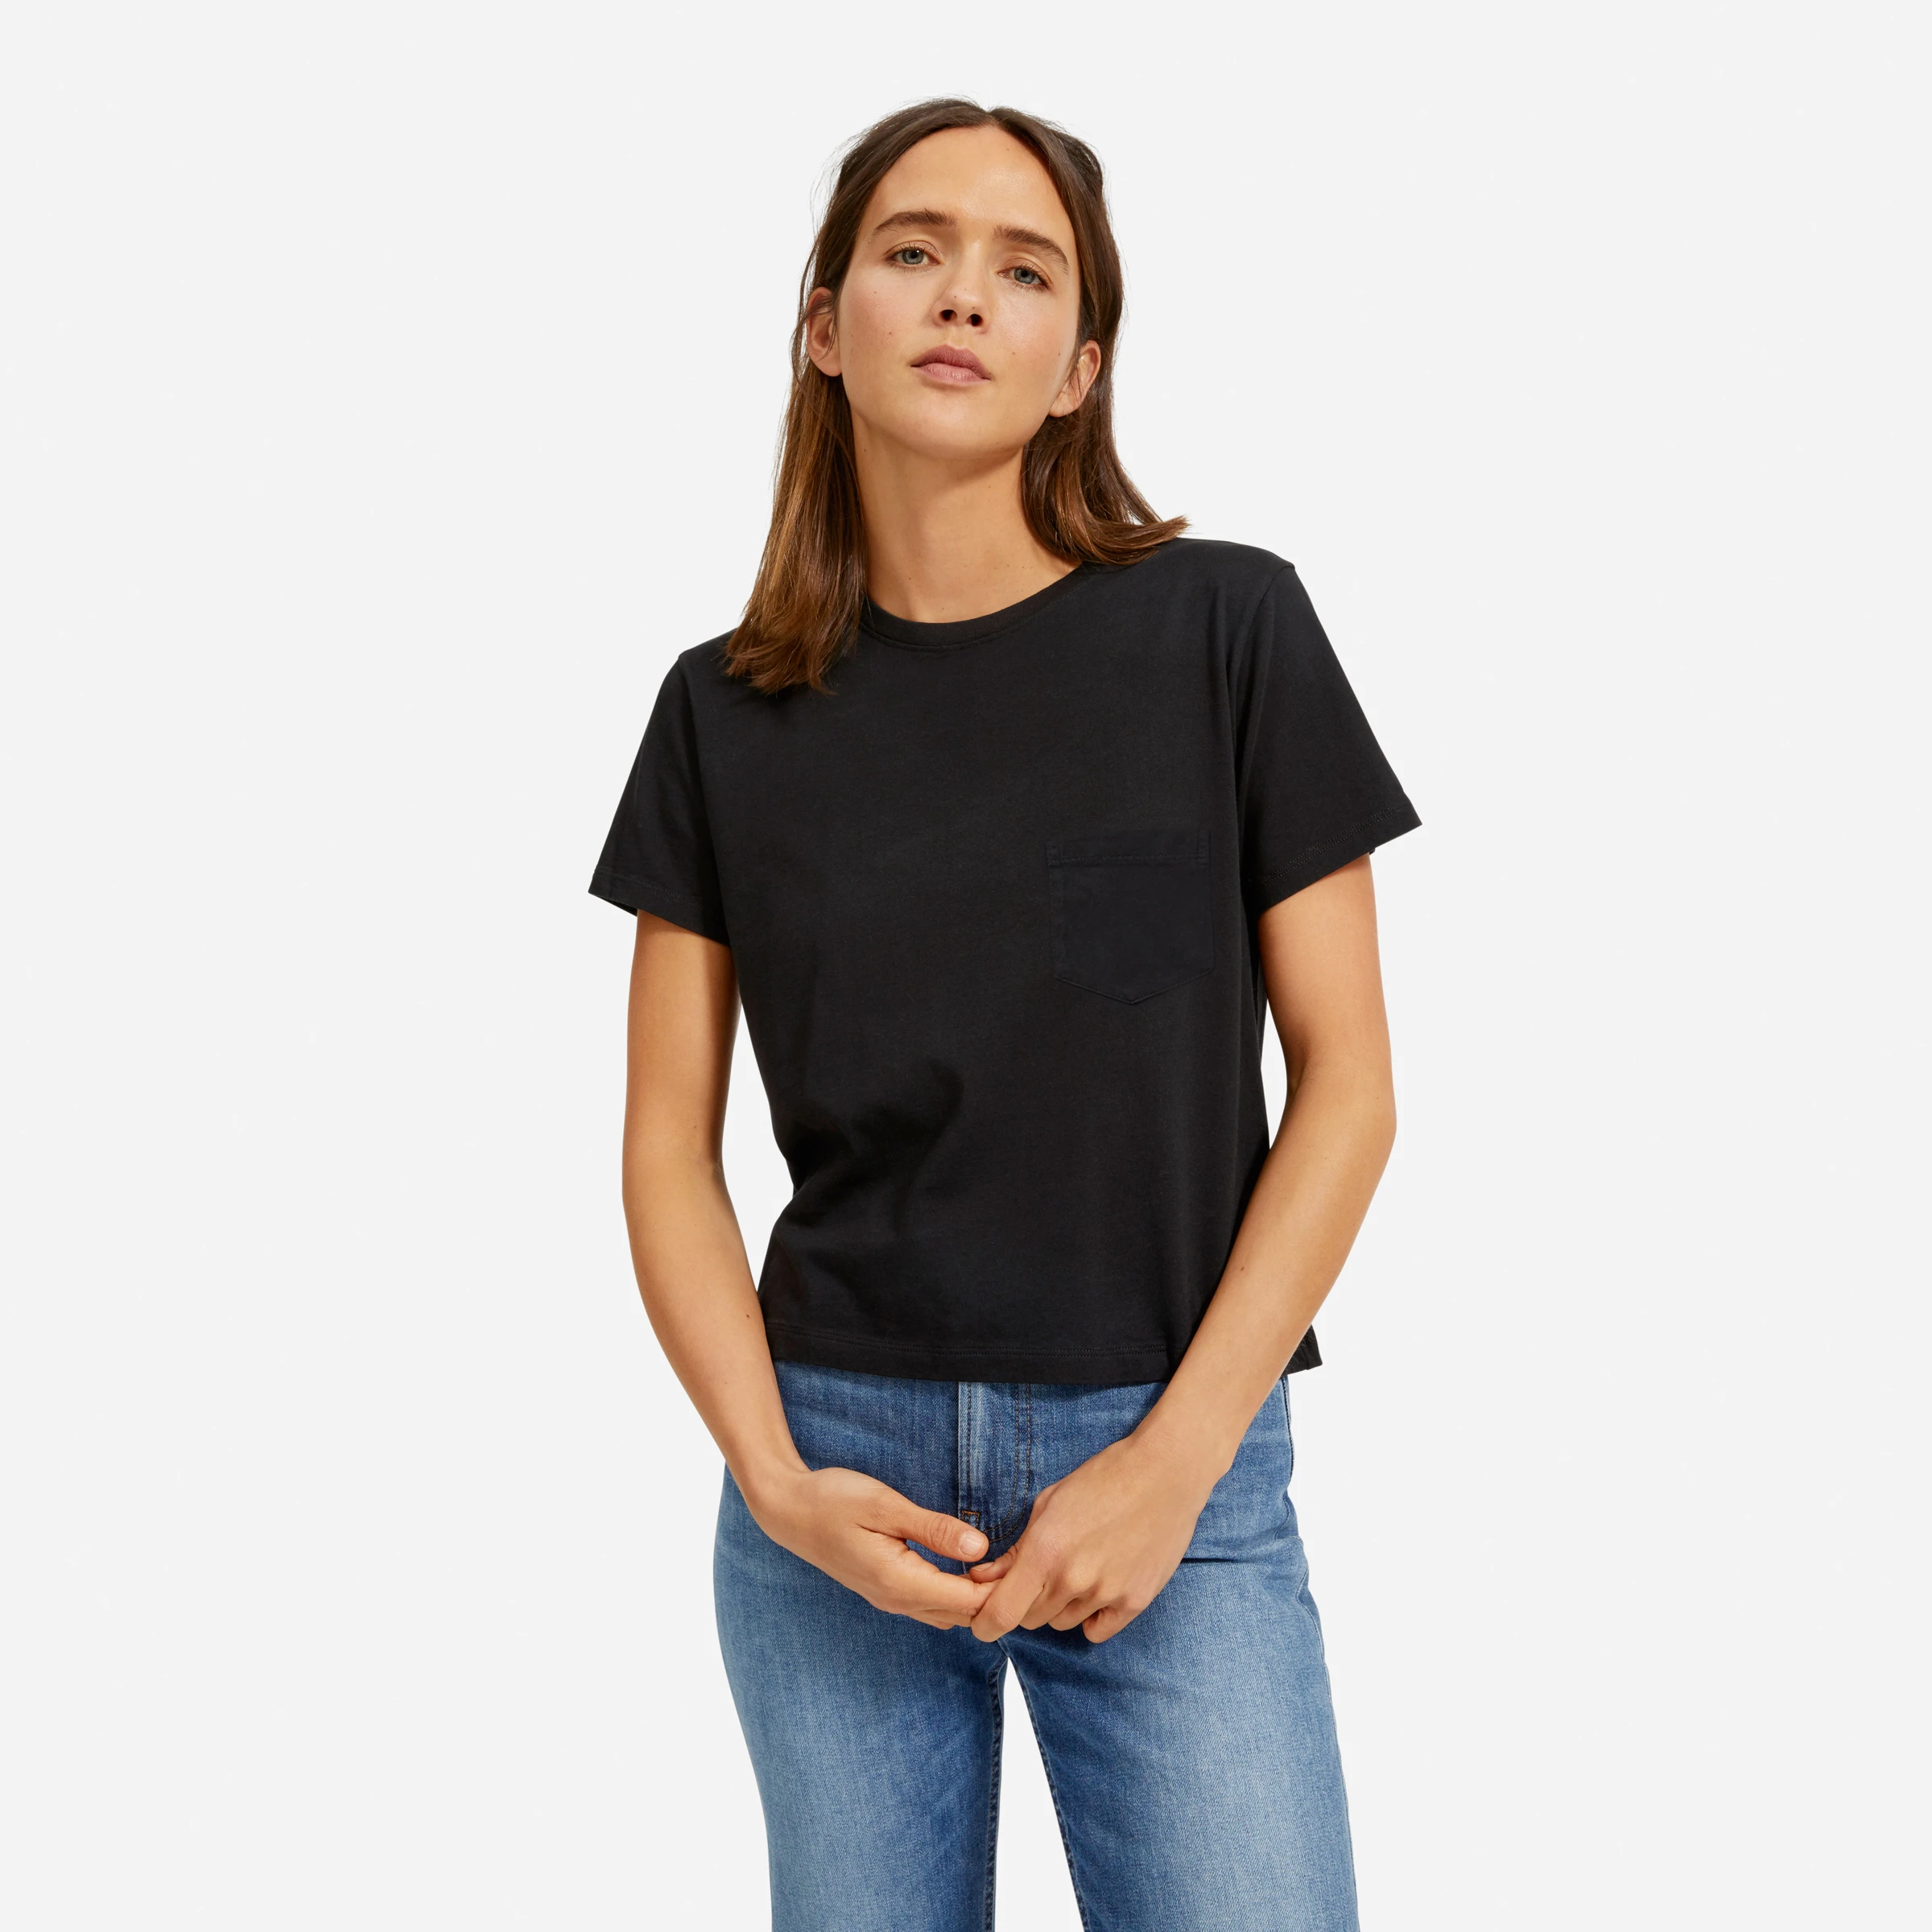 Best Quality Womens Black T-Shirts 2021 